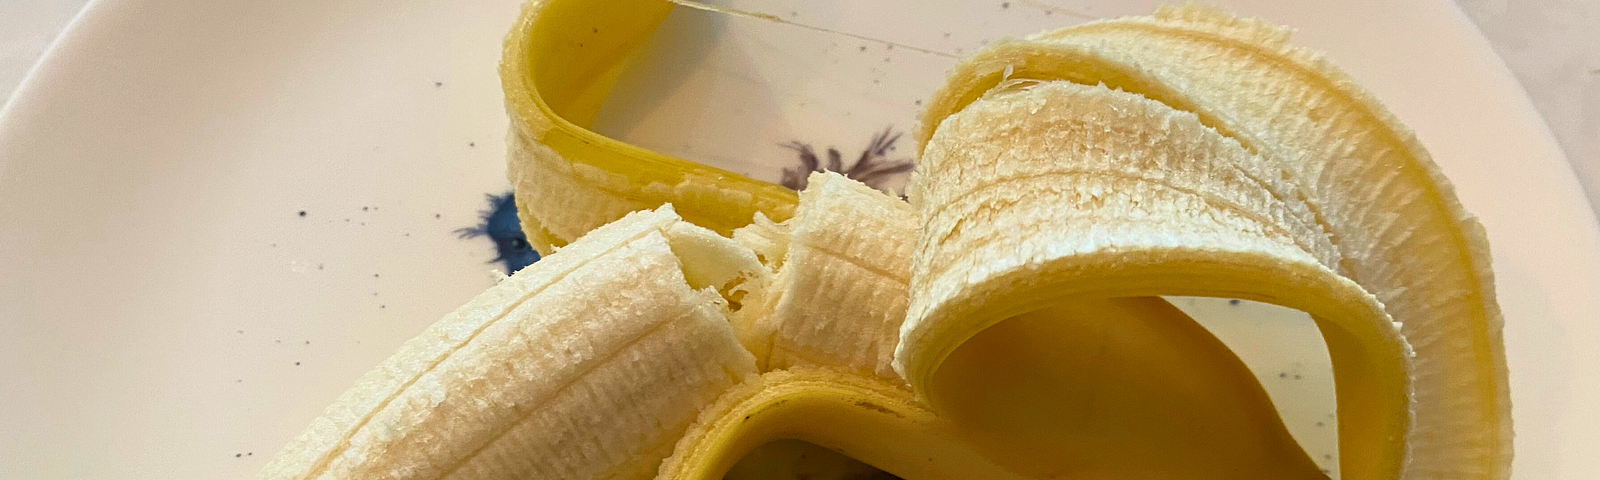 A parent’s nightmare: a broken banana.